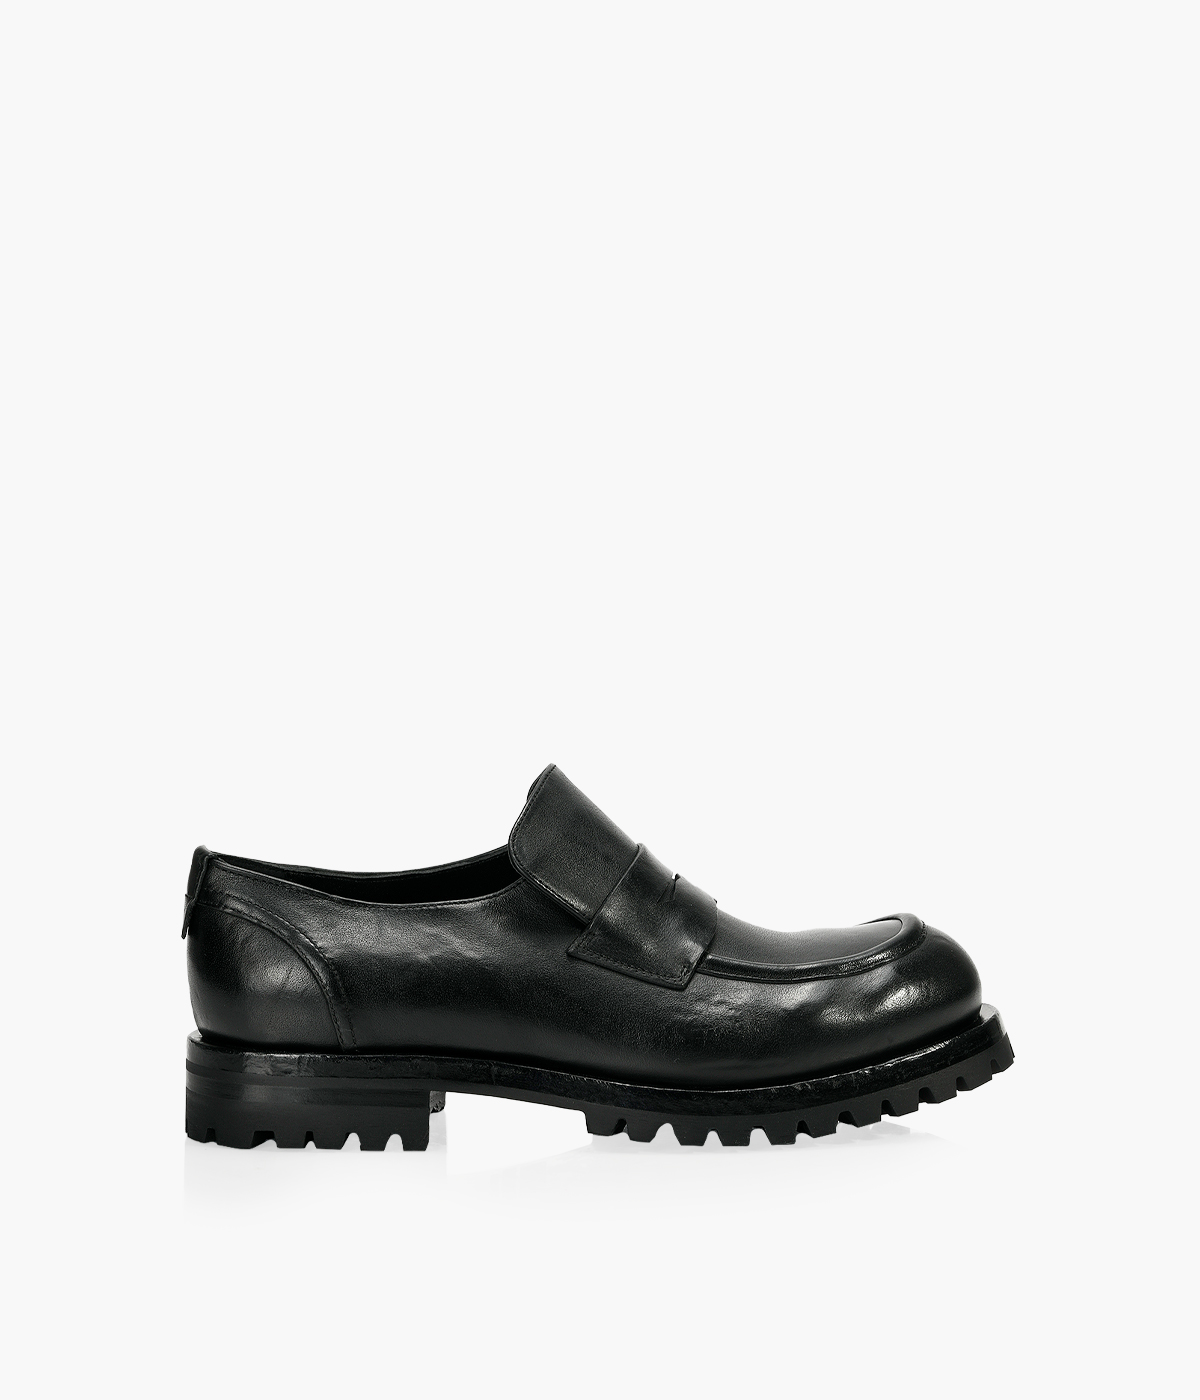 DUCANERO 2563 - Black Leather | Browns Shoes